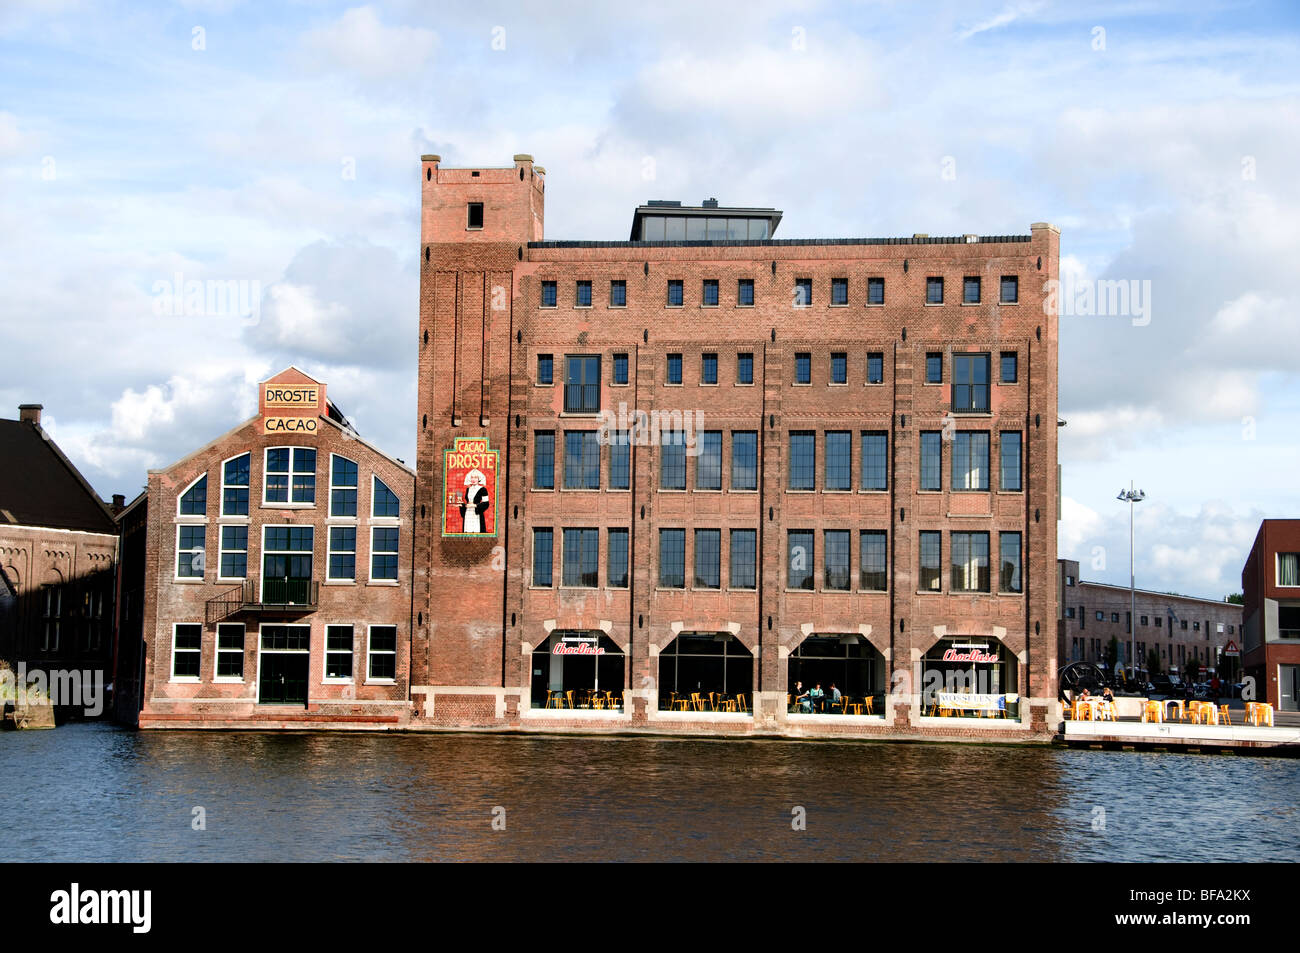 Haarlem Droste paesi bassi nederland olandese Holland chocolade fabbrica di impianto Foto Stock